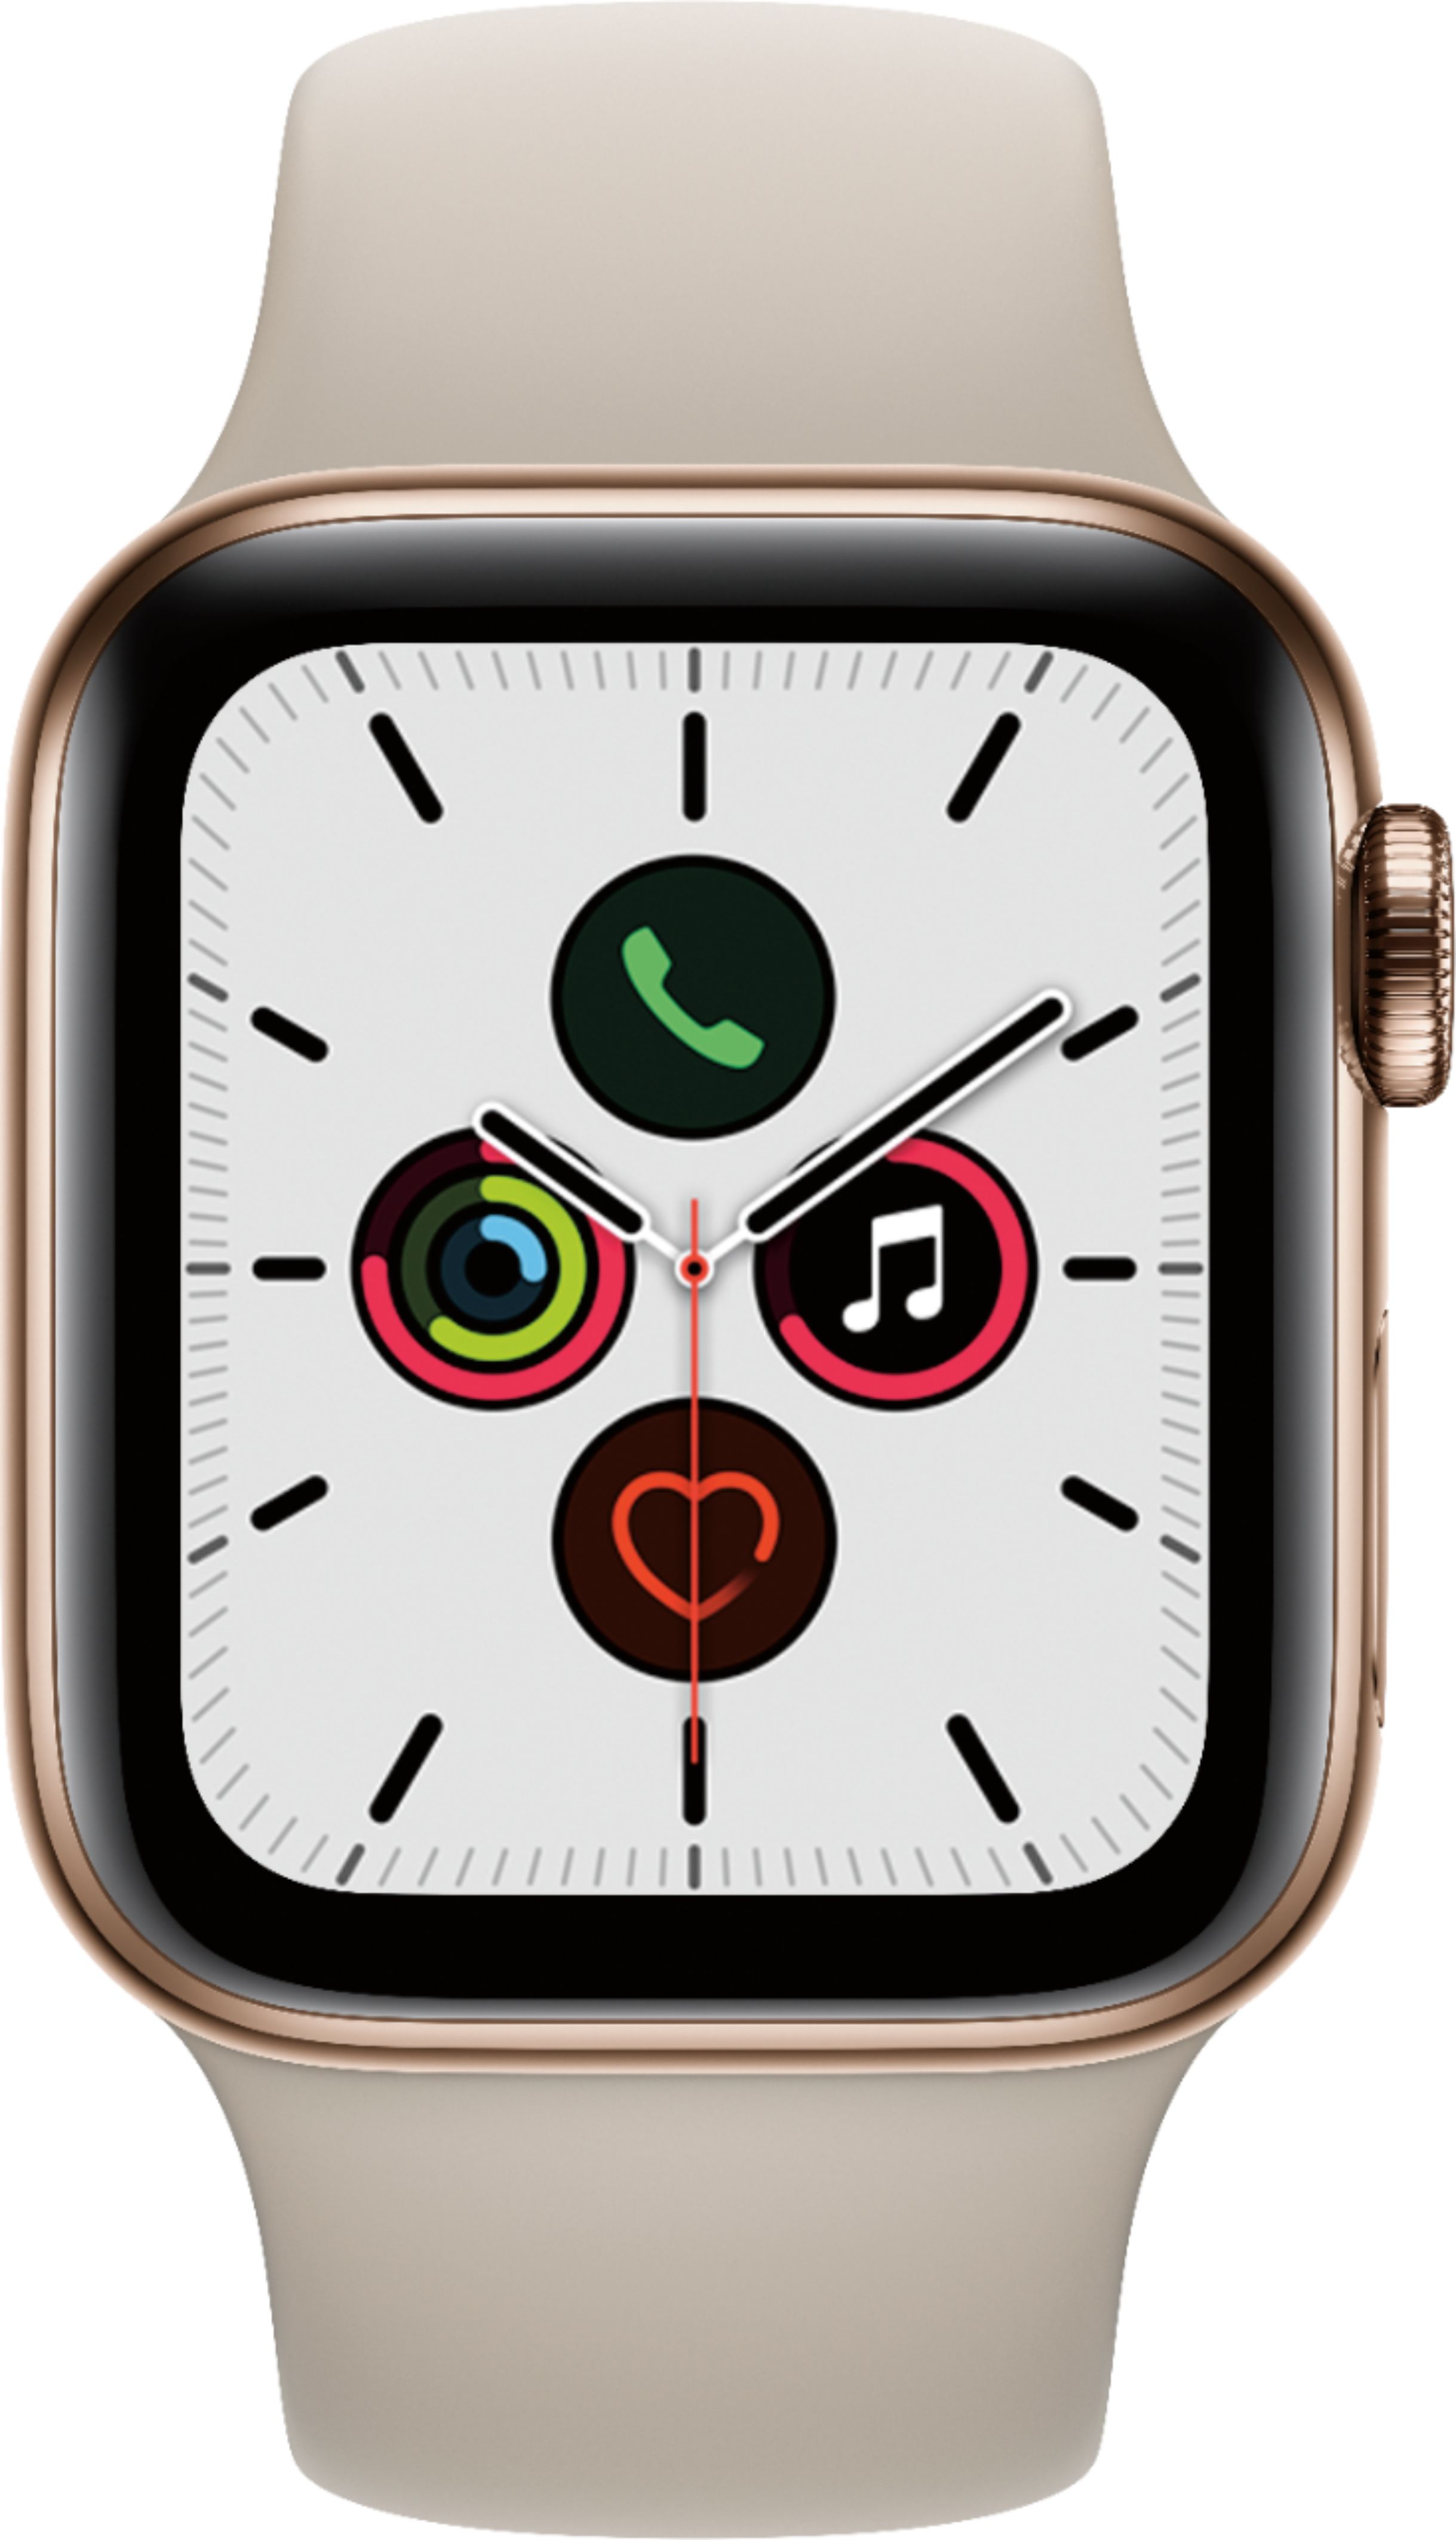 Apple Watch Series 5 (GPS + Cellular) 40mm Gold Stainless Steel Case Stainless Steel Series 5 Apple Watch